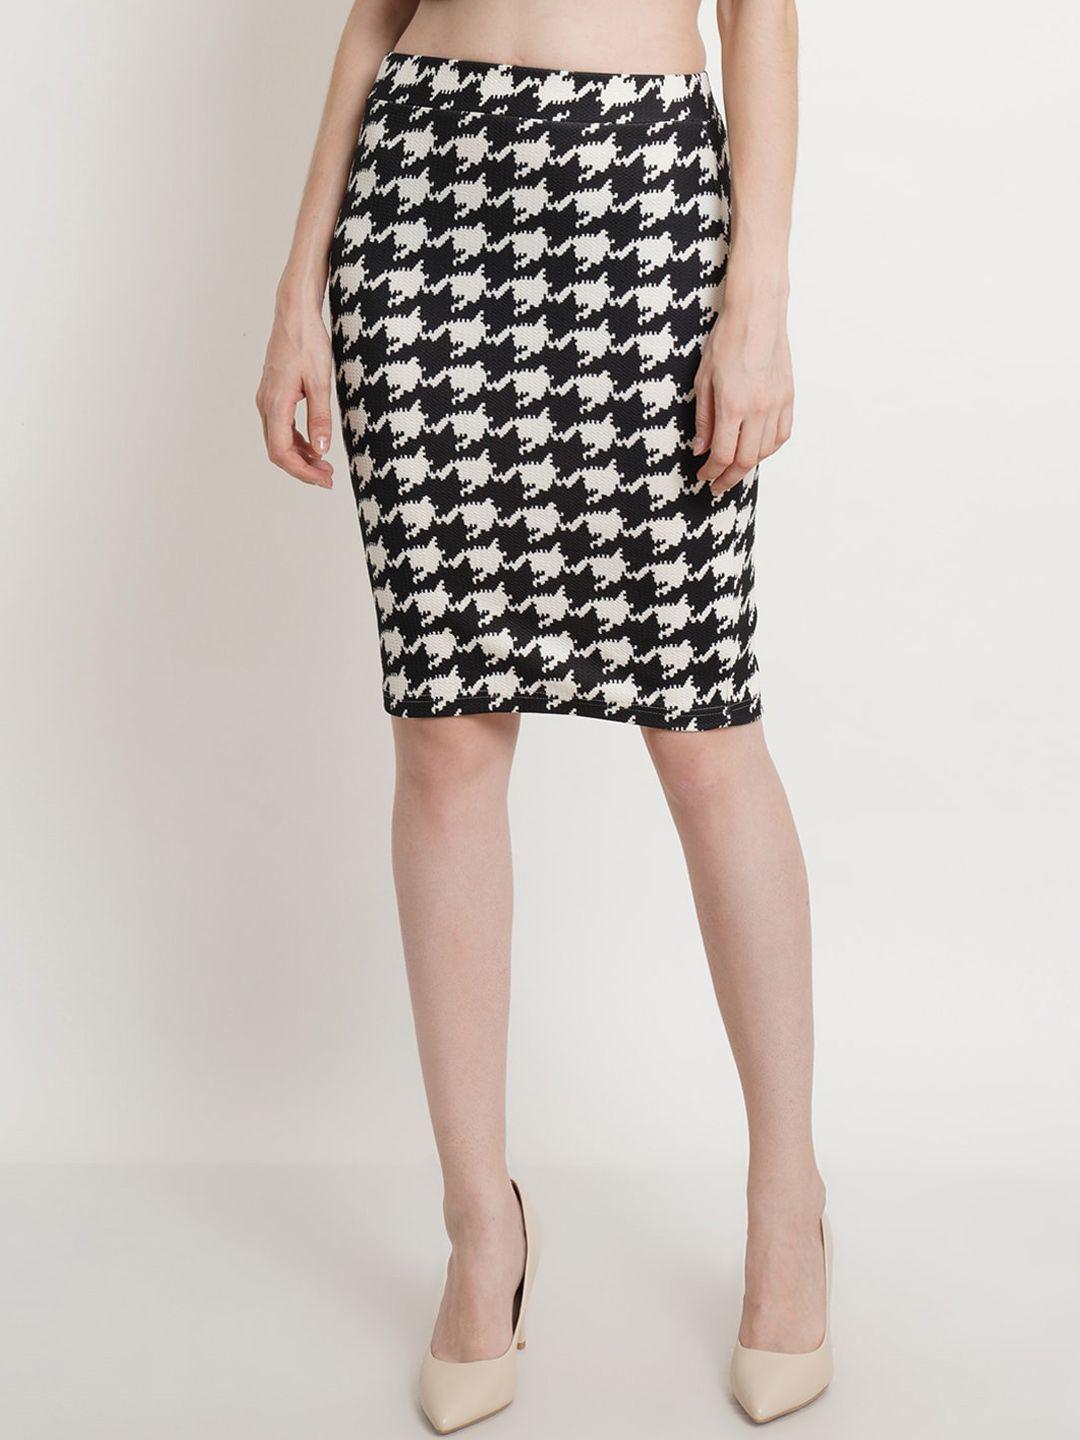 popwings women black & white checked printed knee length pencil skirt